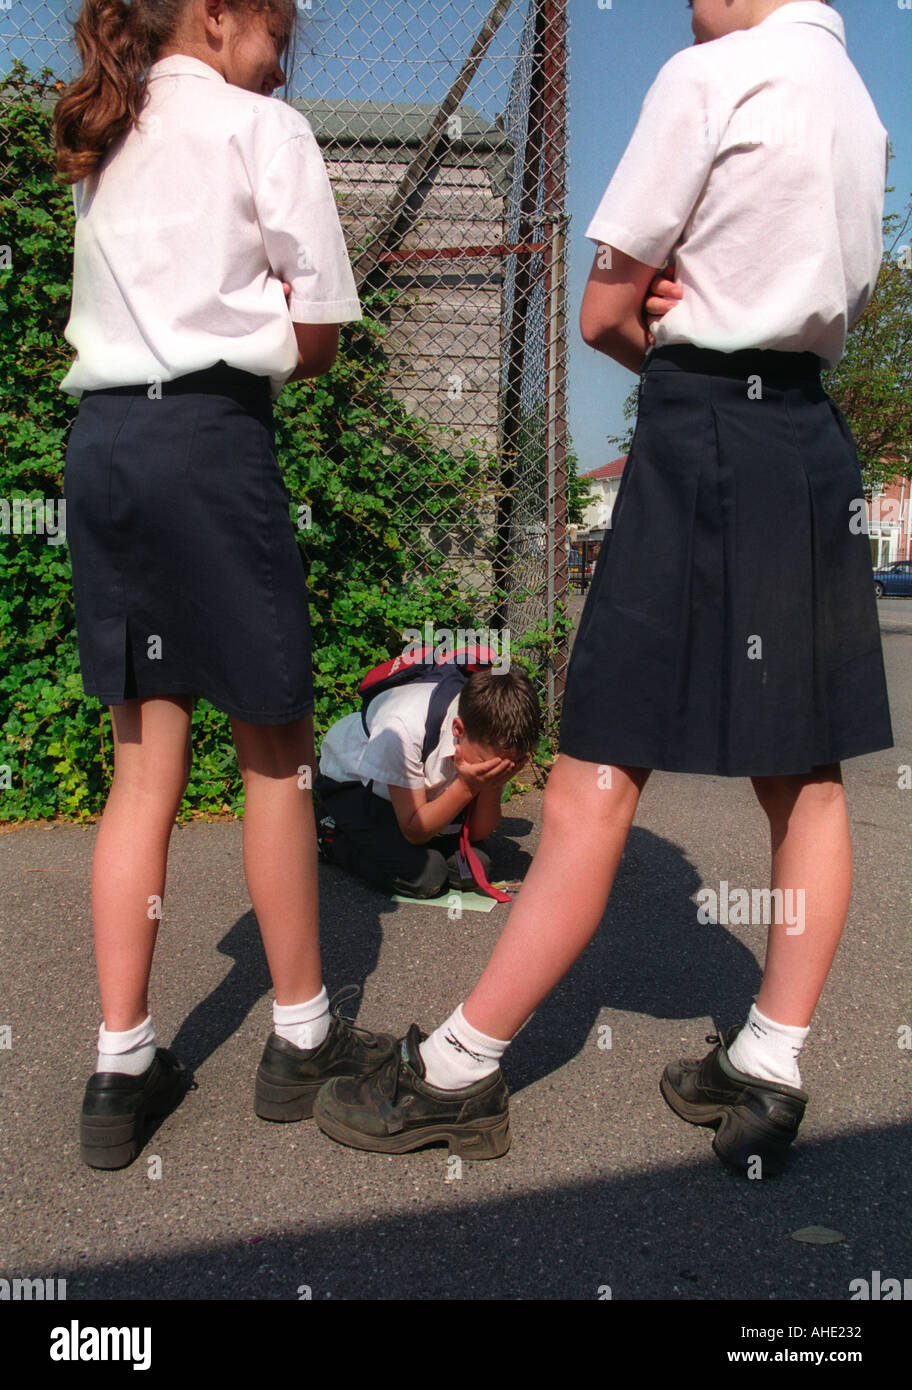 Girls bullying smaller boy at school modelled. Stock Photo